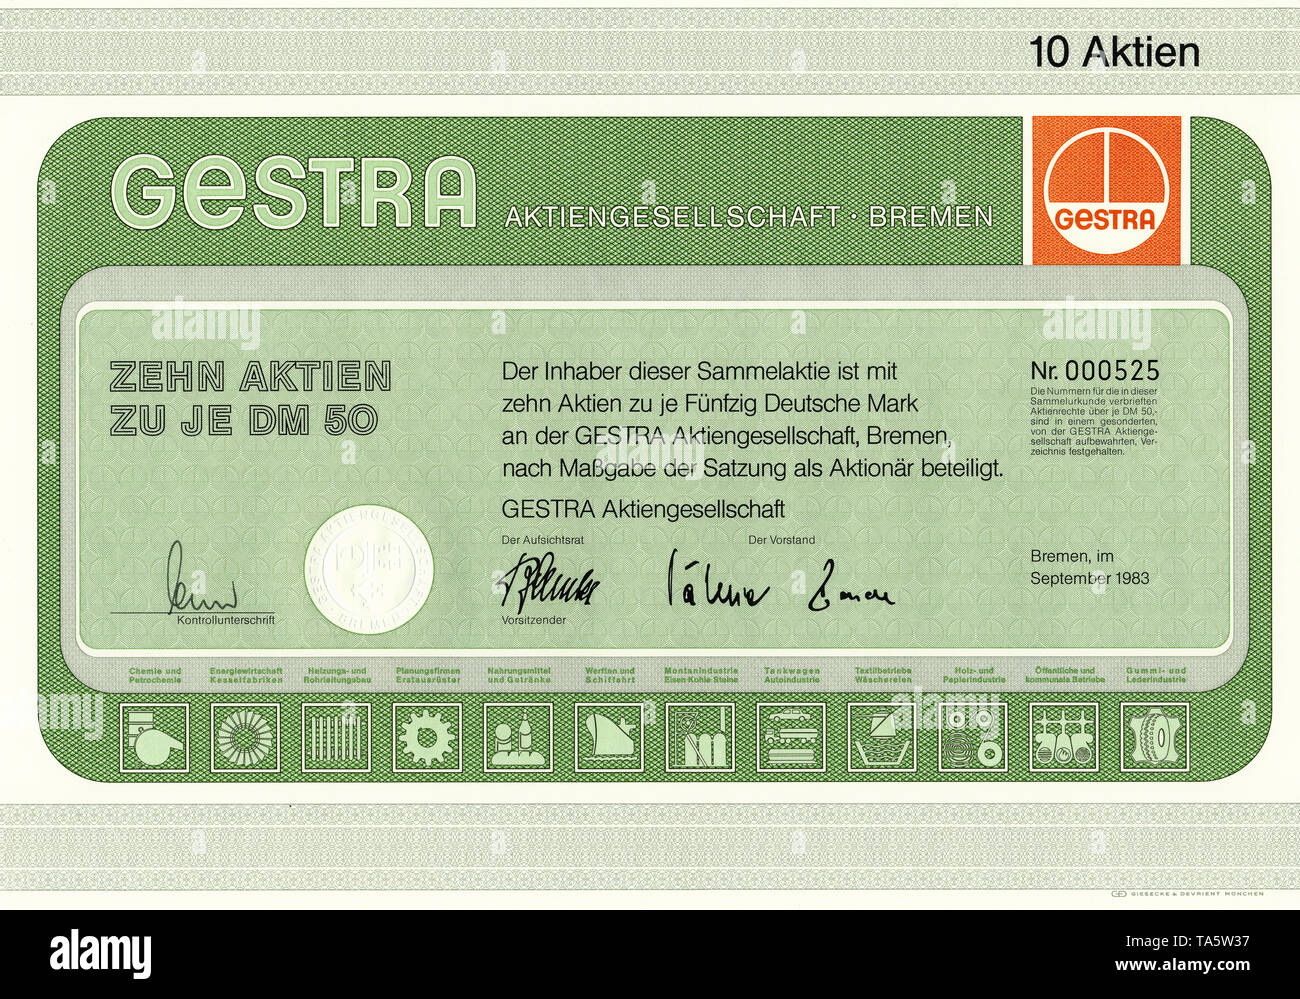 Historic stock certificate, Securities certificate, bearer warrant, Germany, Historische Aktie, 10 Aktien zu 50 DM, GESTRA AG, 1983, Bremen, Deutschland, Europa Stock Photo